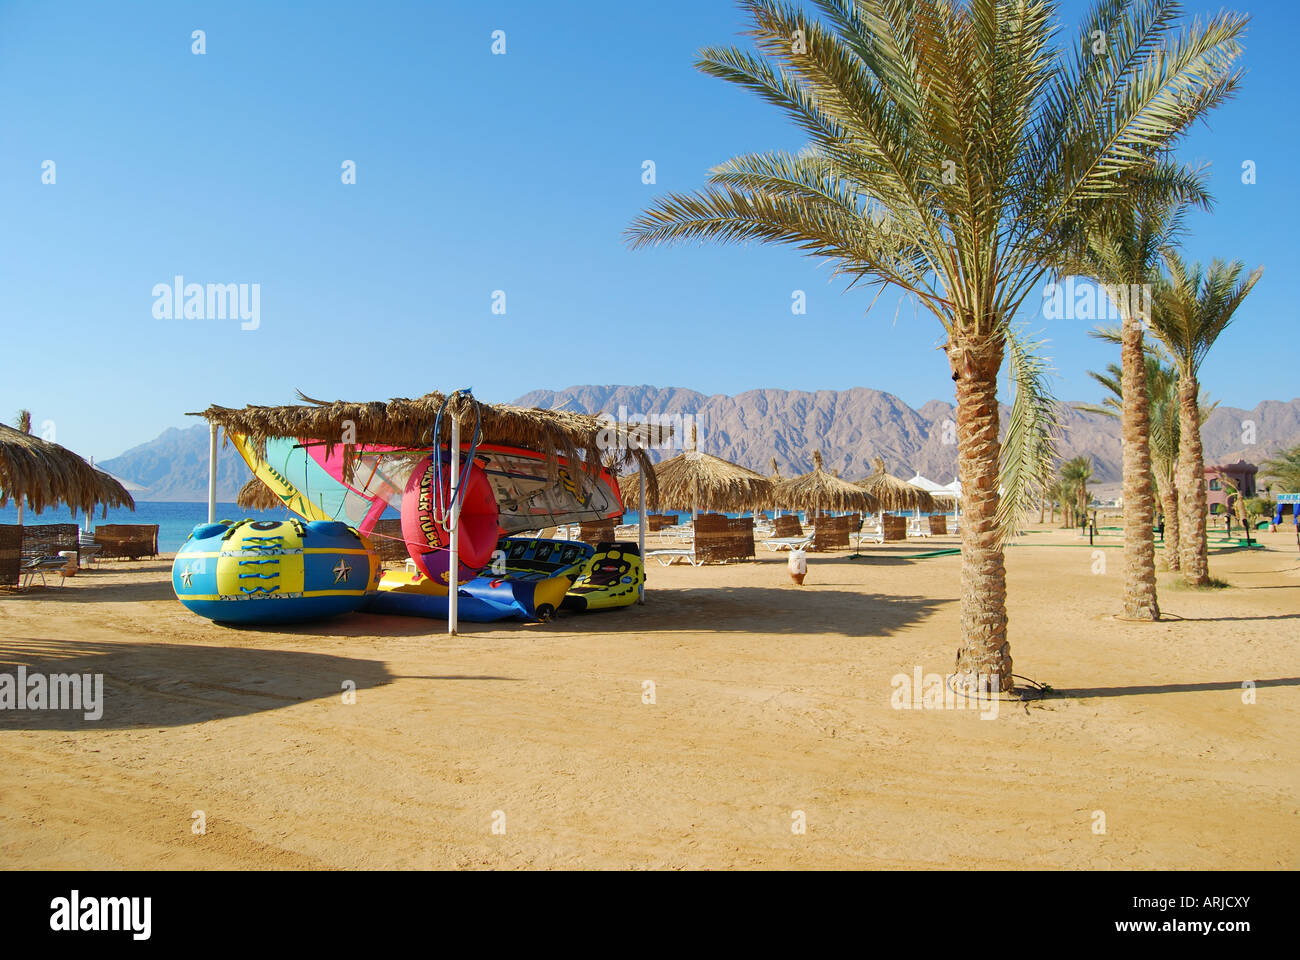 Hilton Nuweiba Coral Resort beach, Nuweiba, péninsule du Sinaï, Égypte Banque D'Images